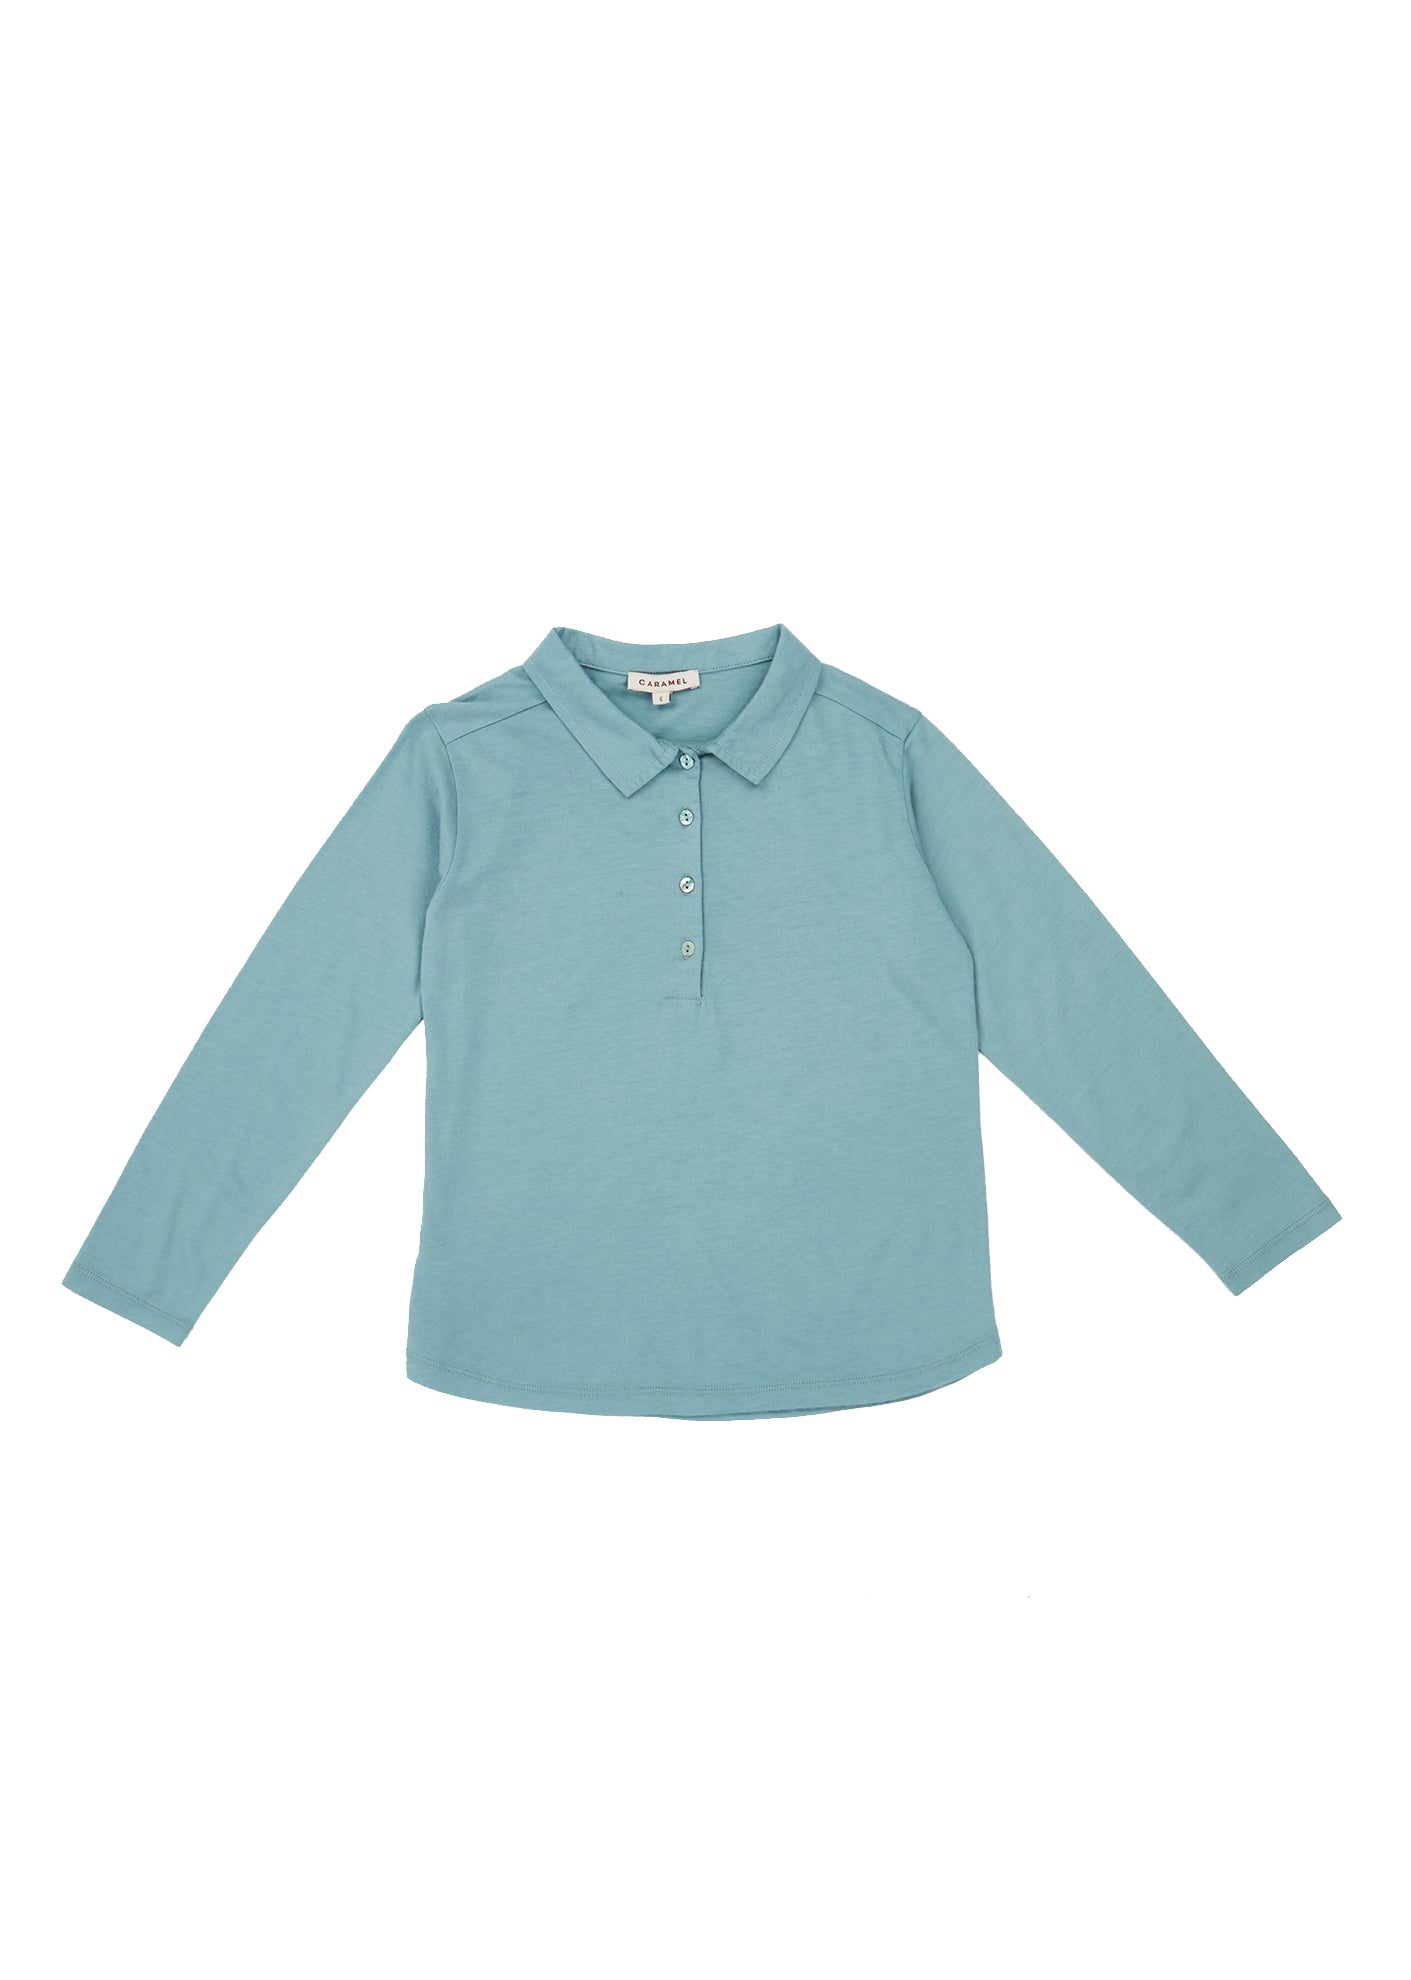 Boys Light Blue Cotton Polo Shirt